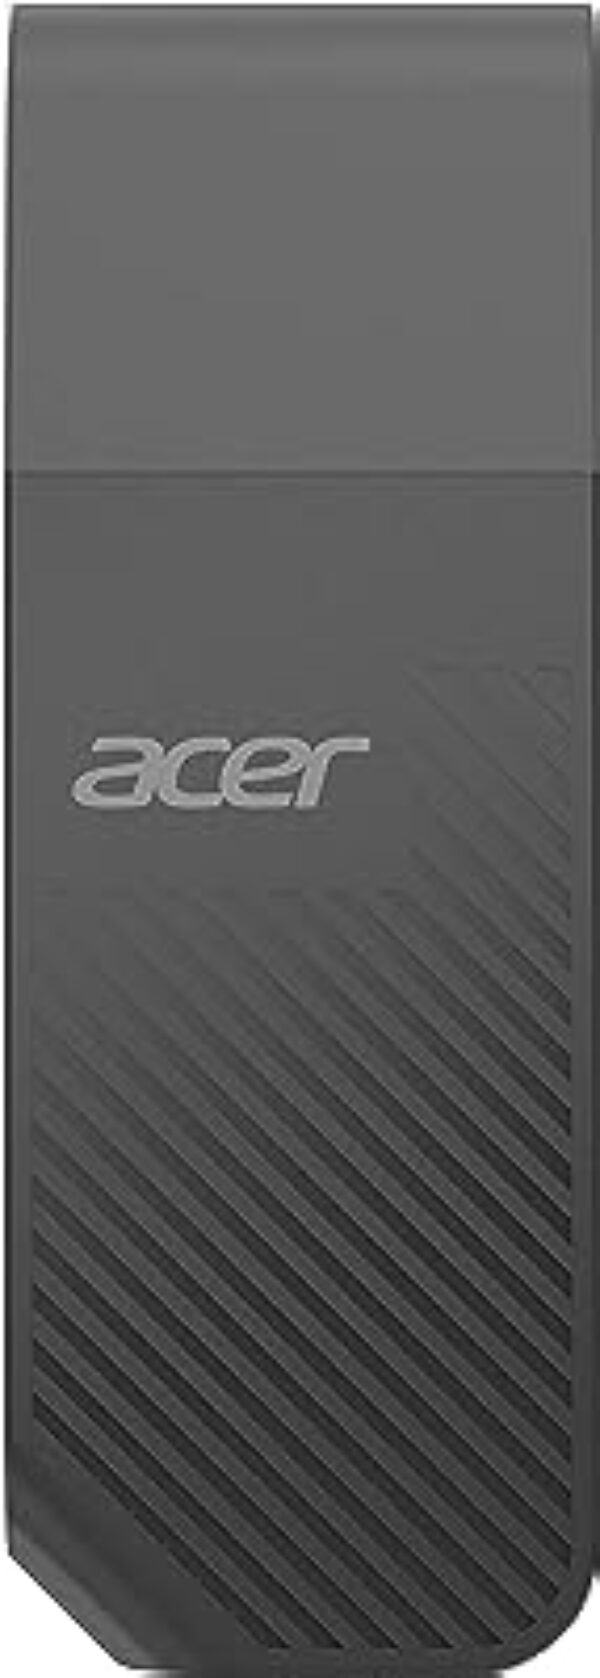 Acer UP200 USB 2.0 Pen Drive